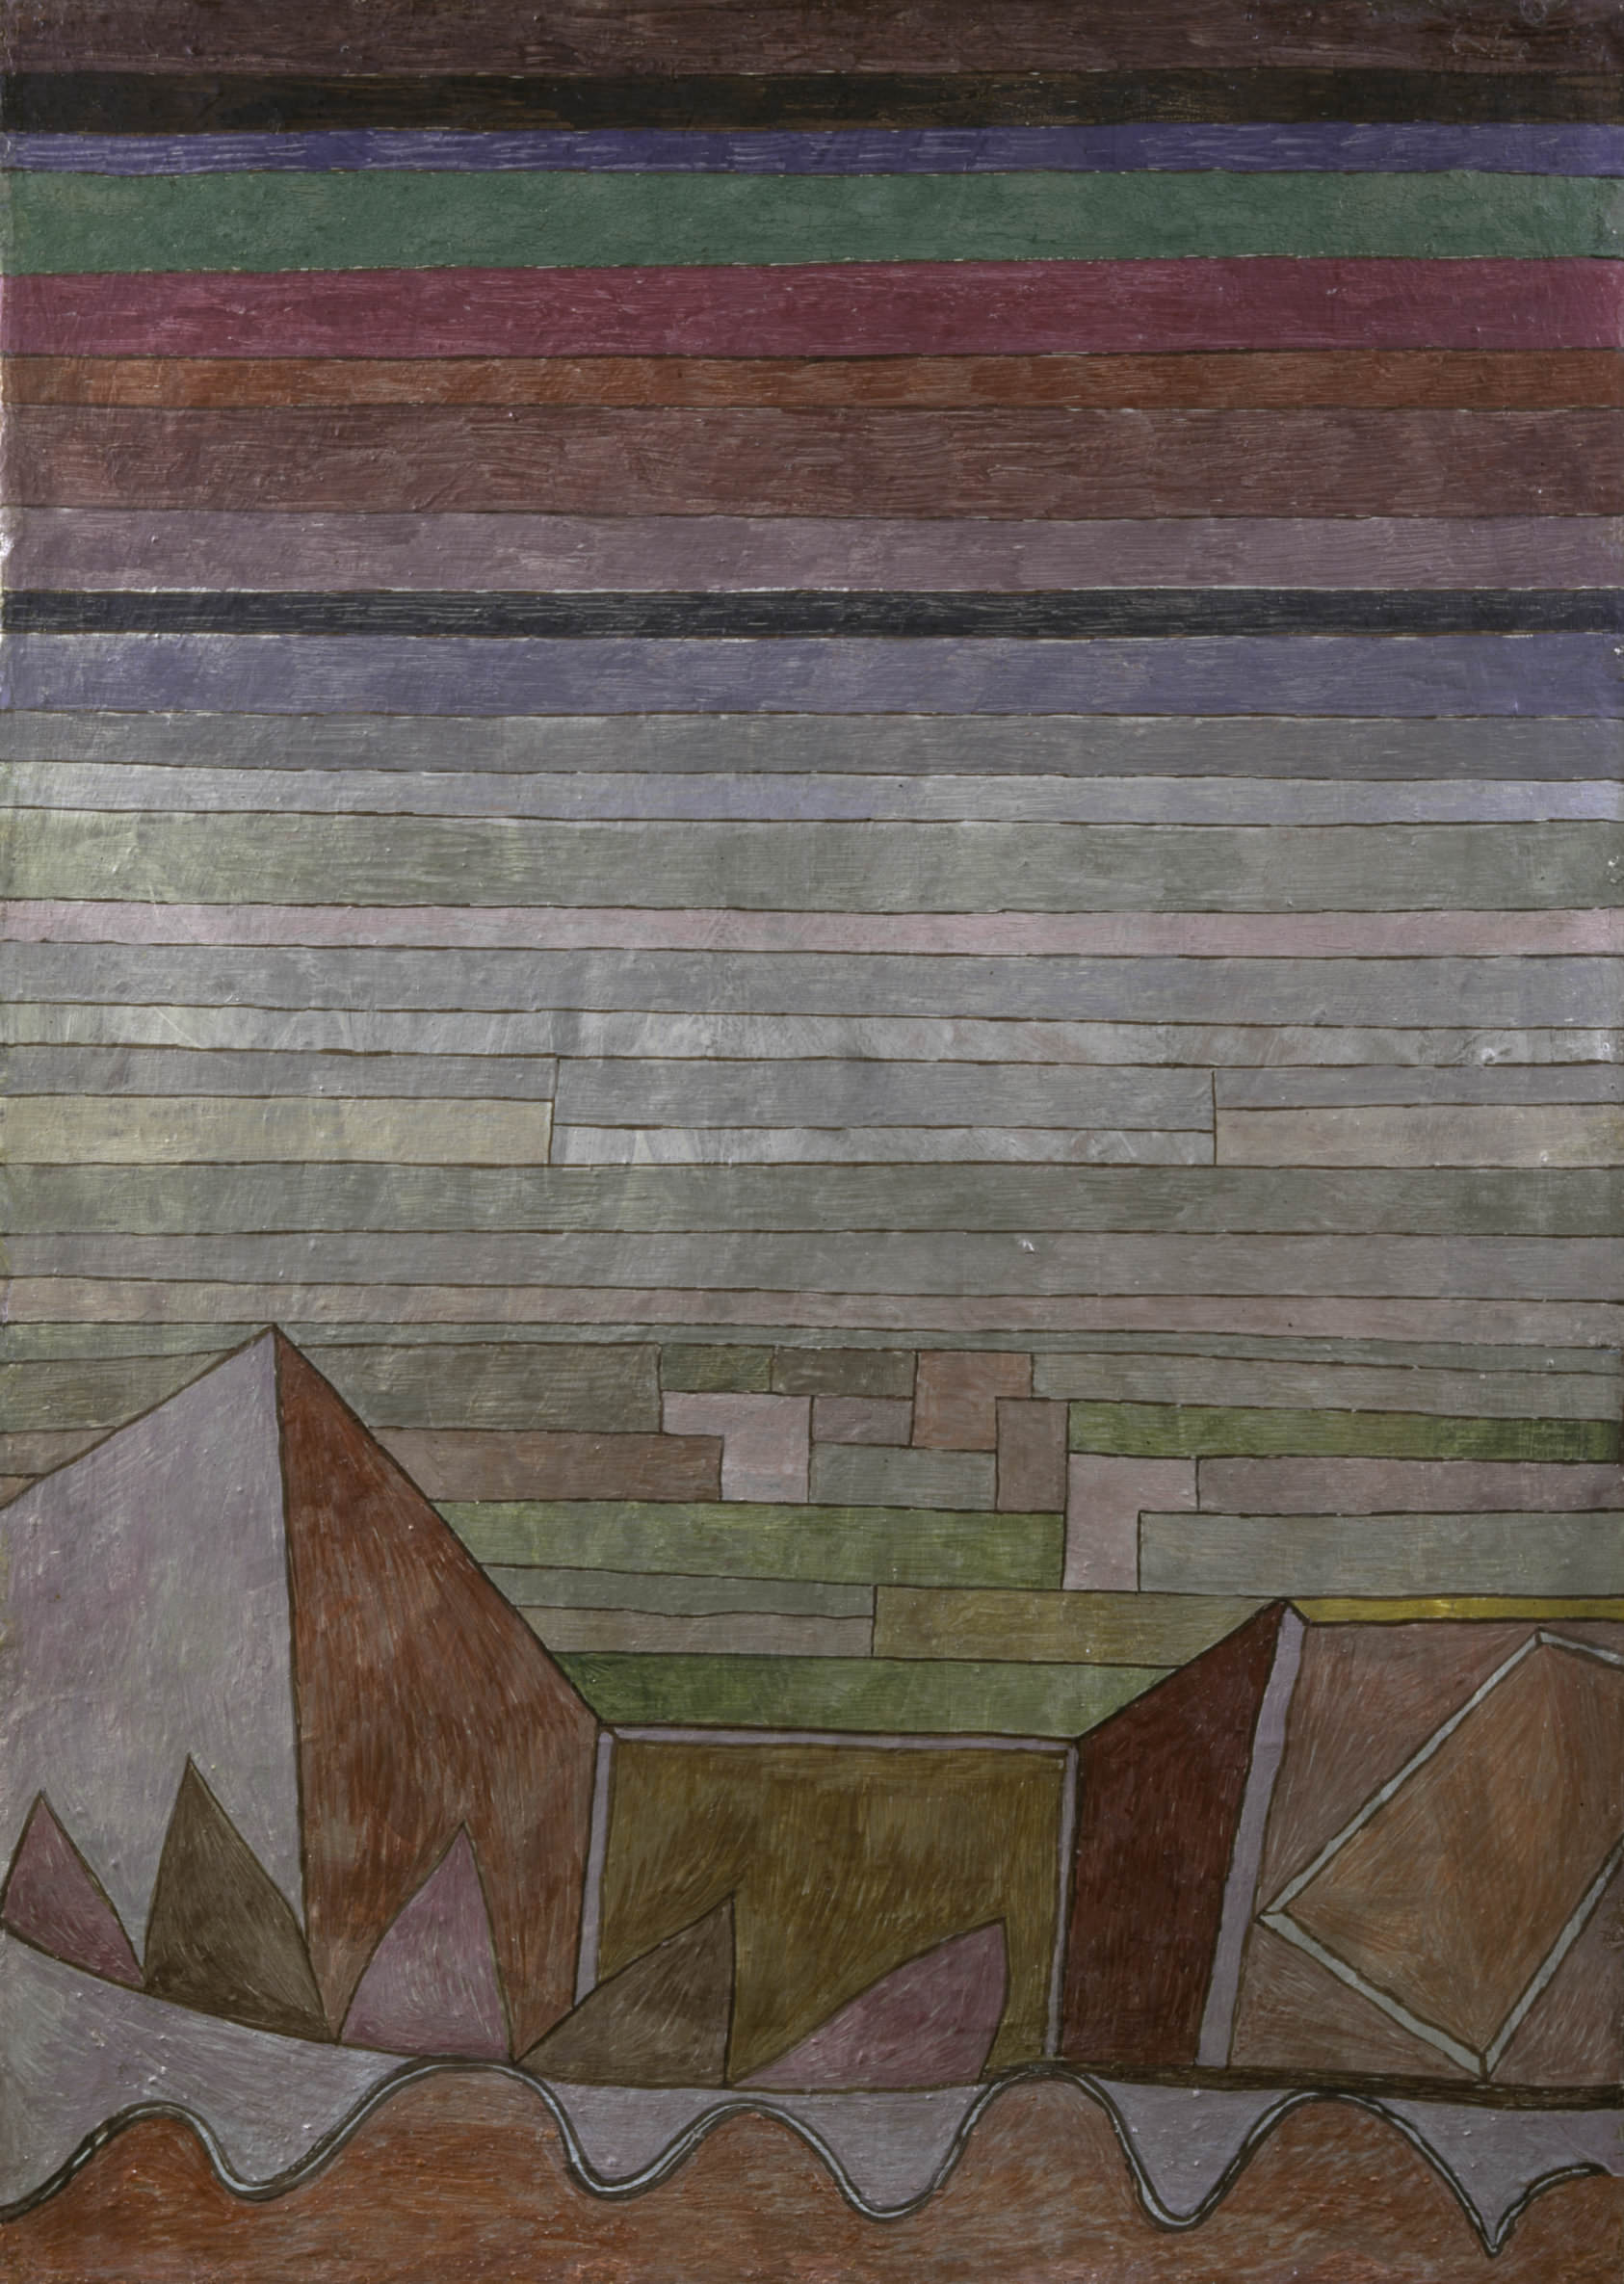  fig. 15 Paul Klee,  Blick in das Fruchtland  [View into the Fertile Country] , 1932, 189, oil on cardboard, 48,7 x 34,7 cm, © Städel Museum, Frankfurt am Main 